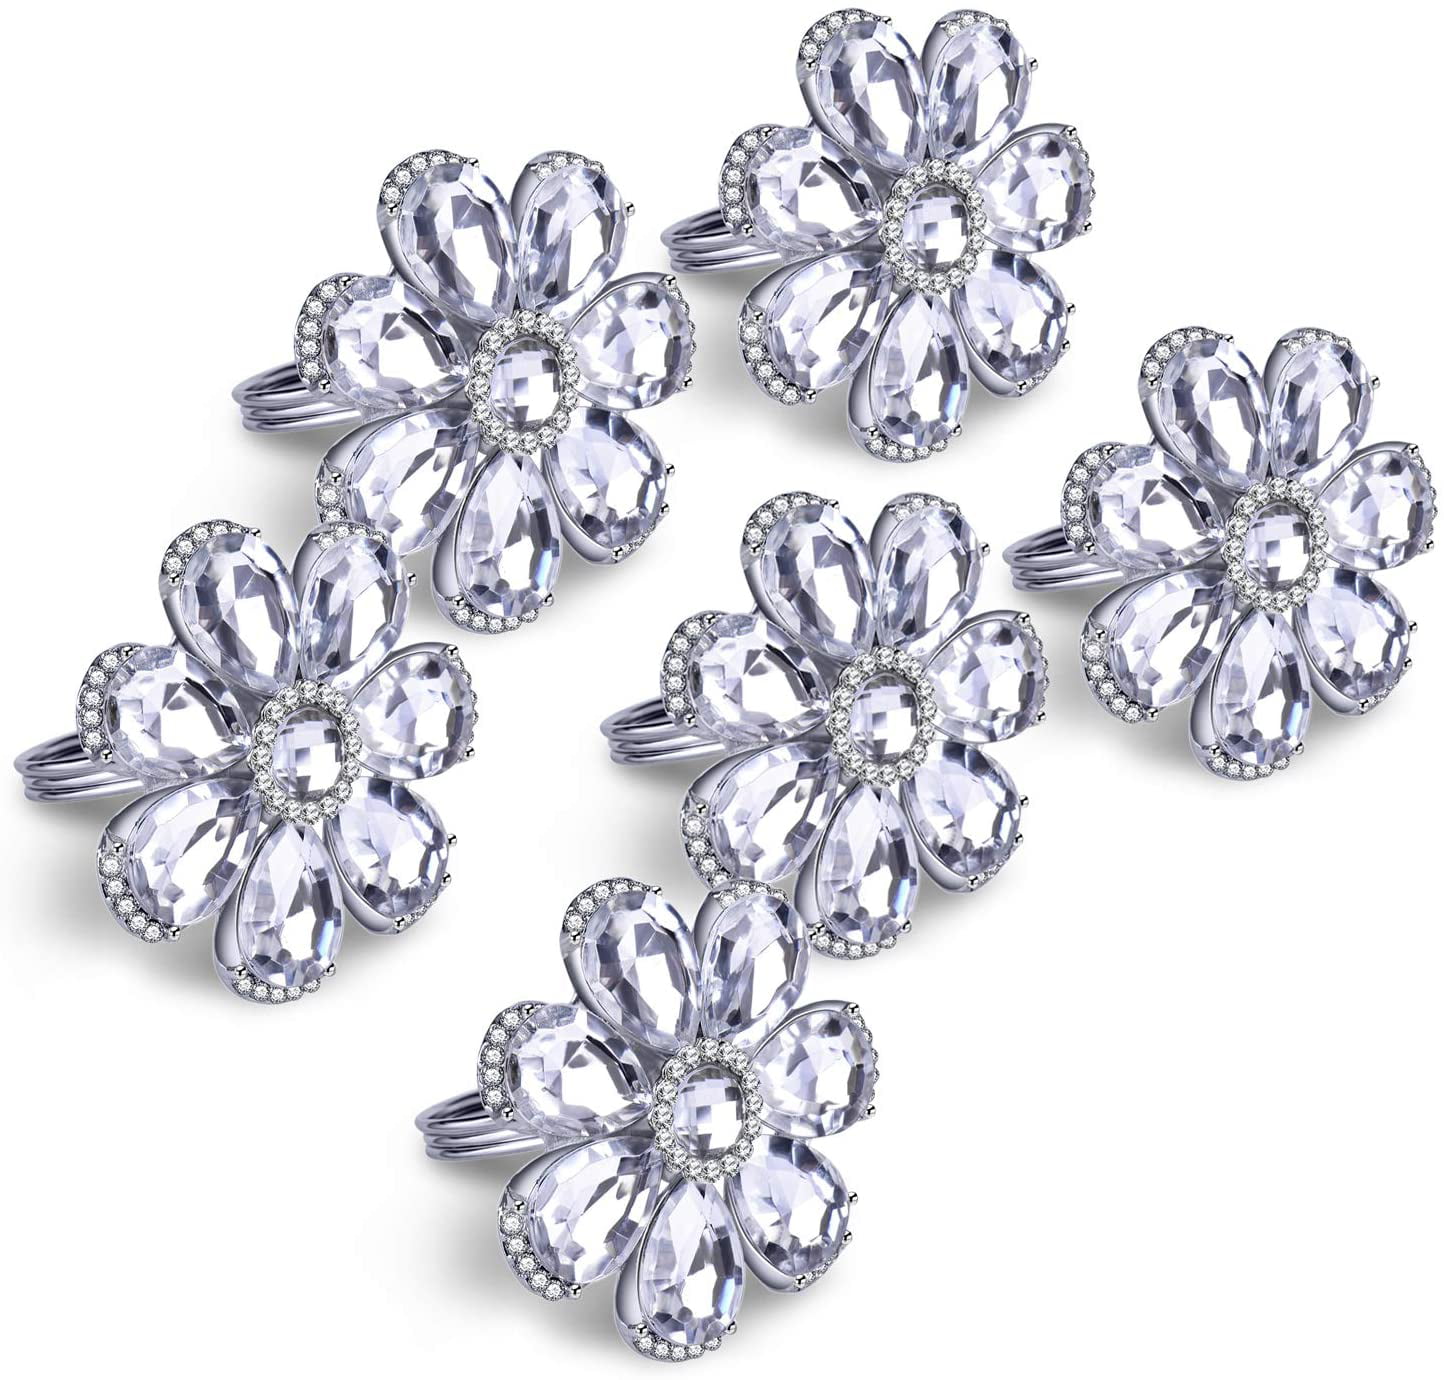 ElegantPark DM Women Diamond Rhinestones Shoe Clips Decorative Wedding Party Accessories Charms Jewelry Decoration 